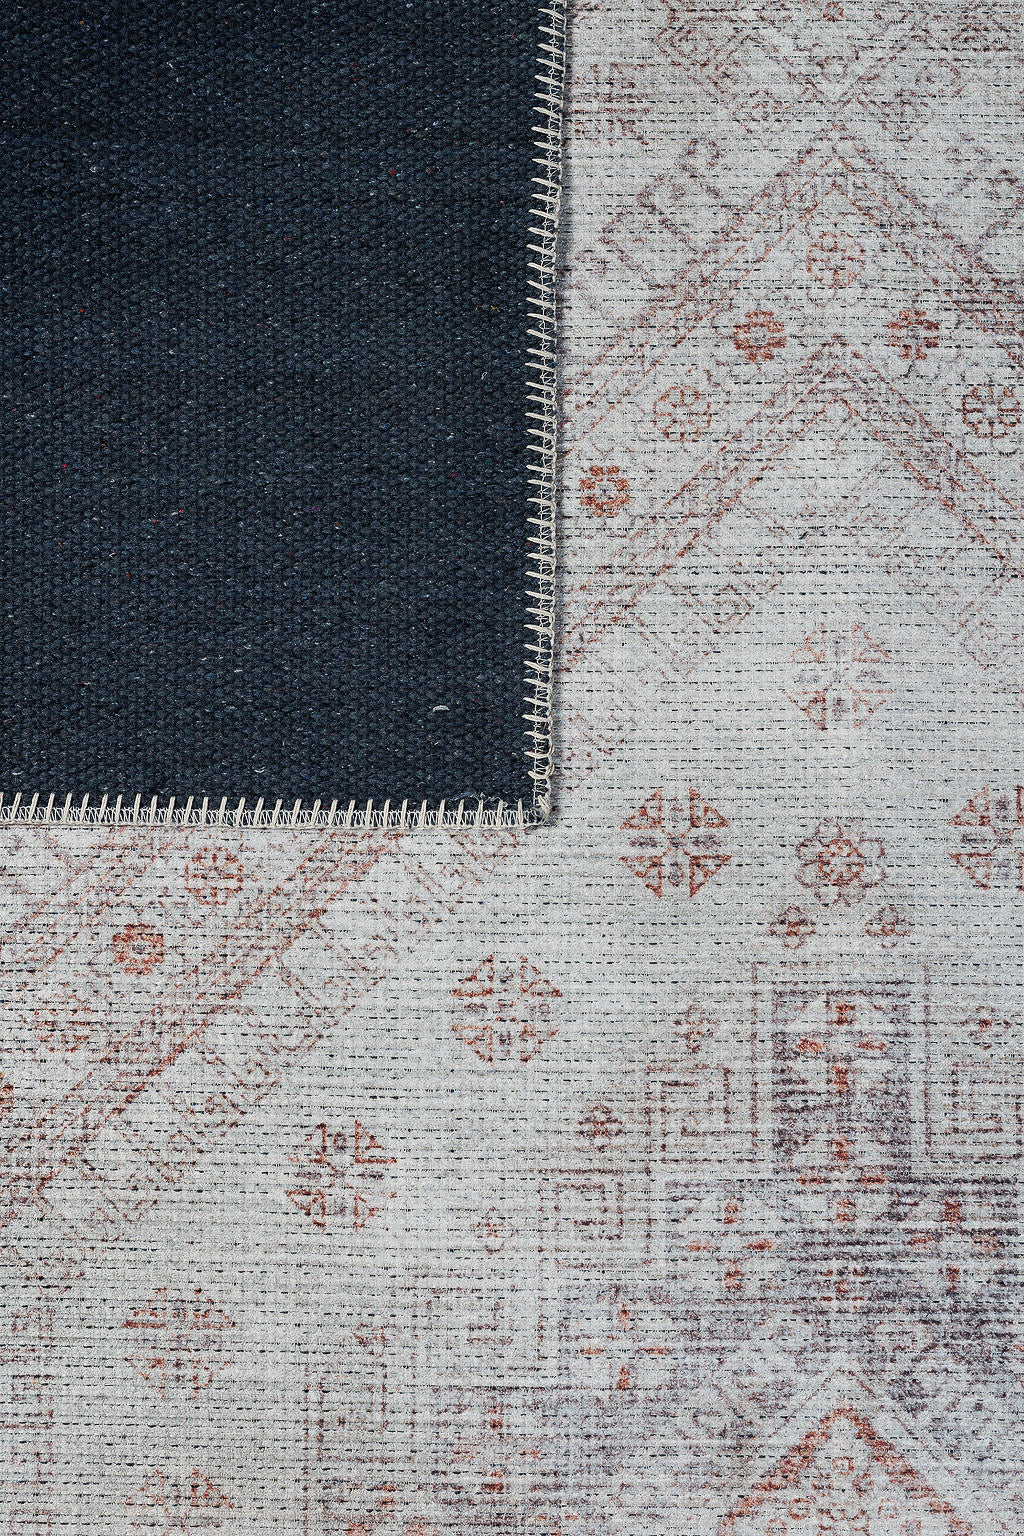 Grey bordered vintage style rug